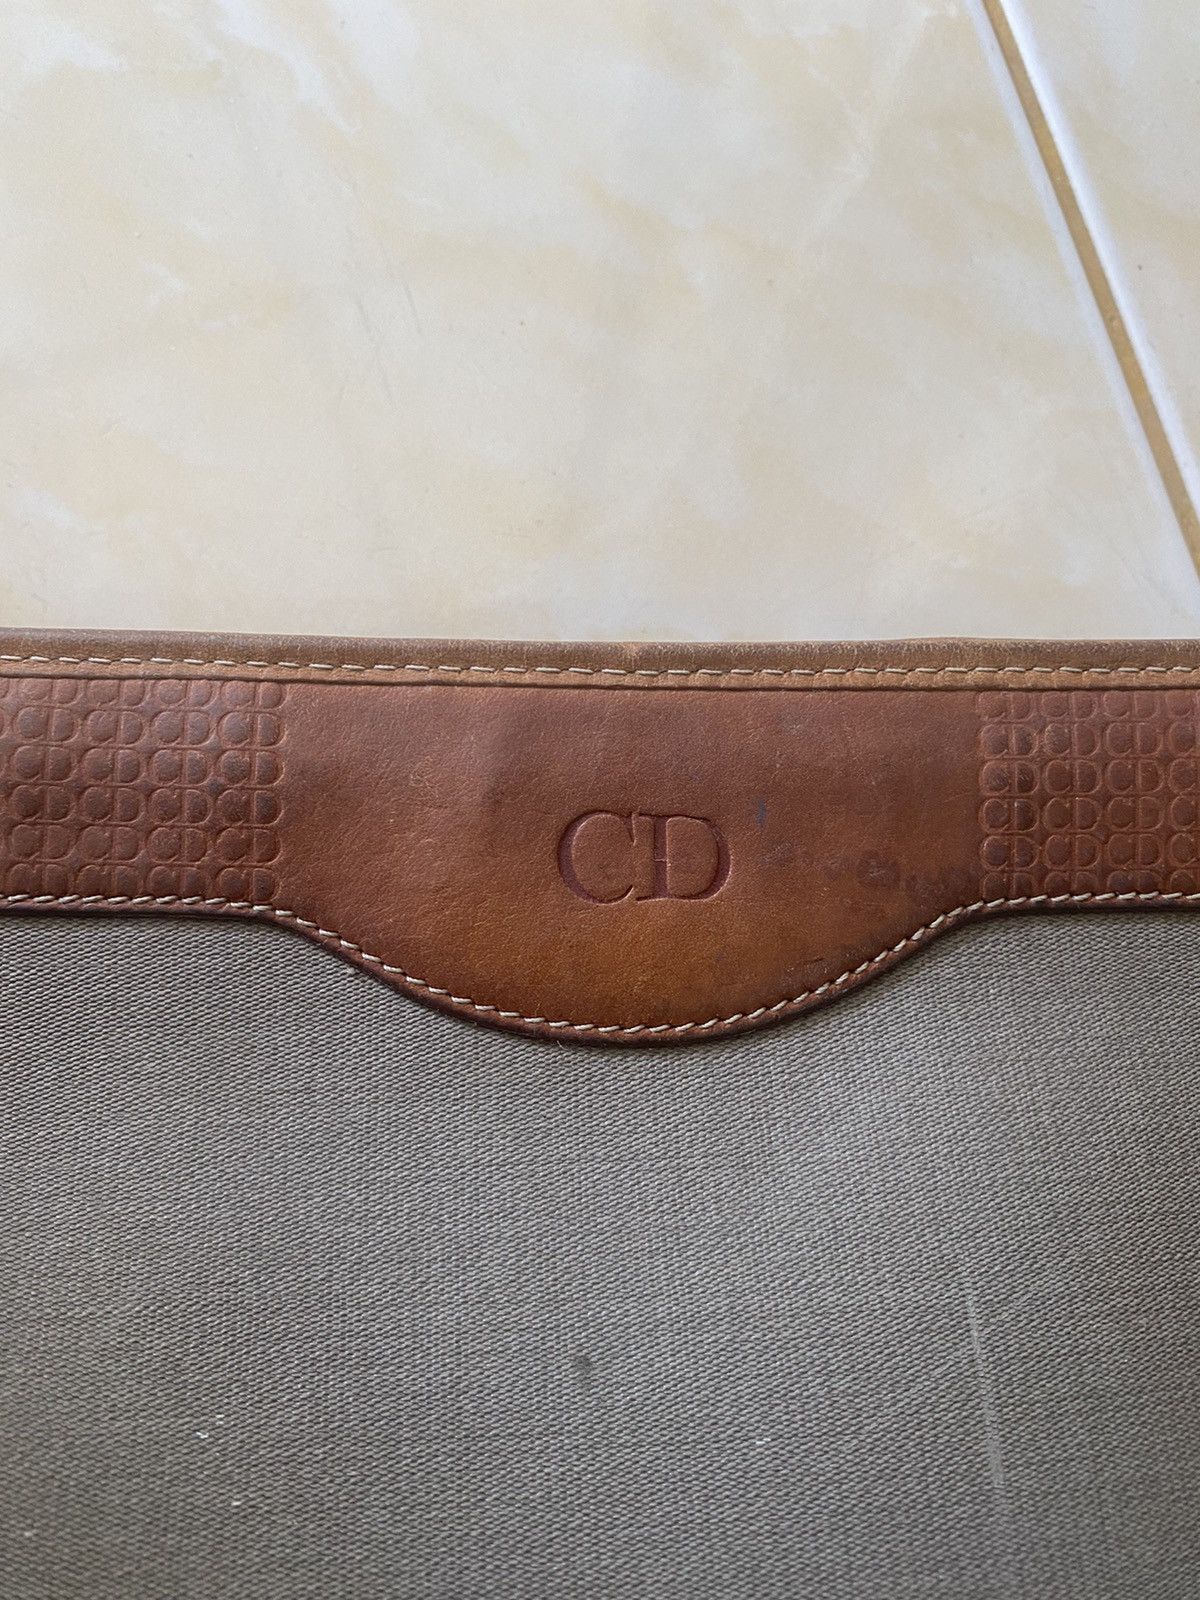 Vintage Christian Dior Leather Clutch - 9